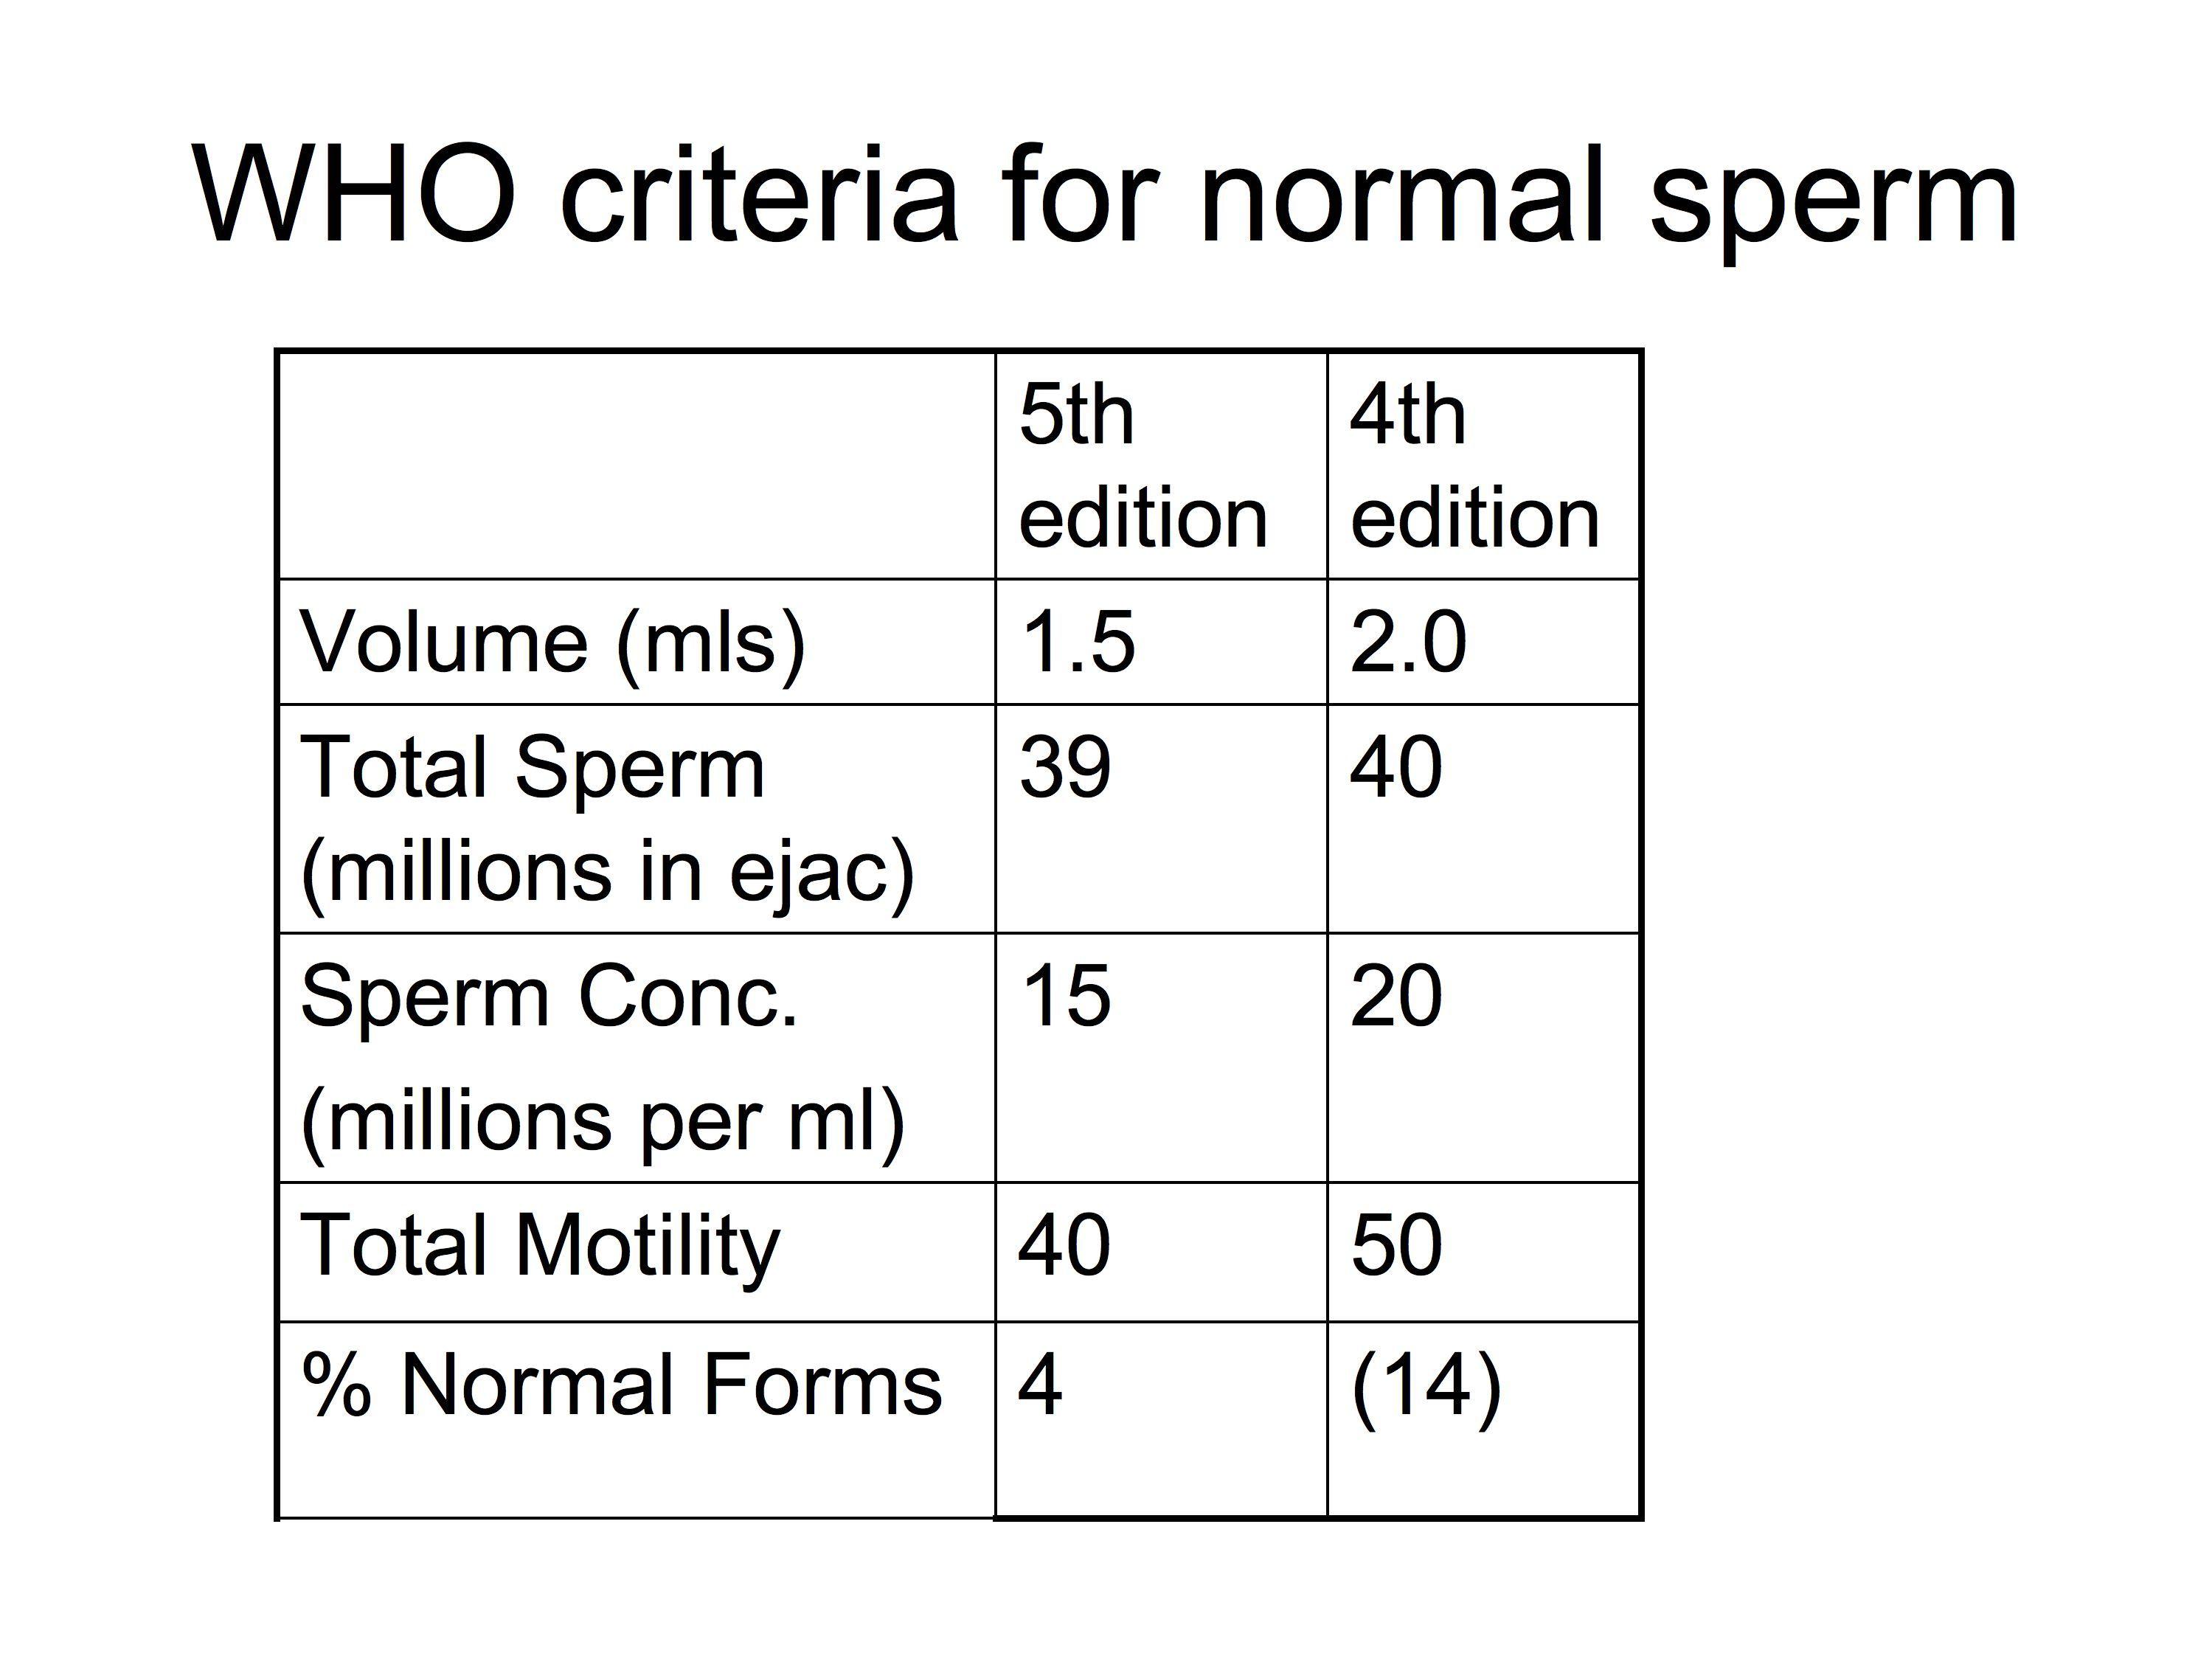 Aqua reccomend Infrequent ejaculation causes poor sperm morphology